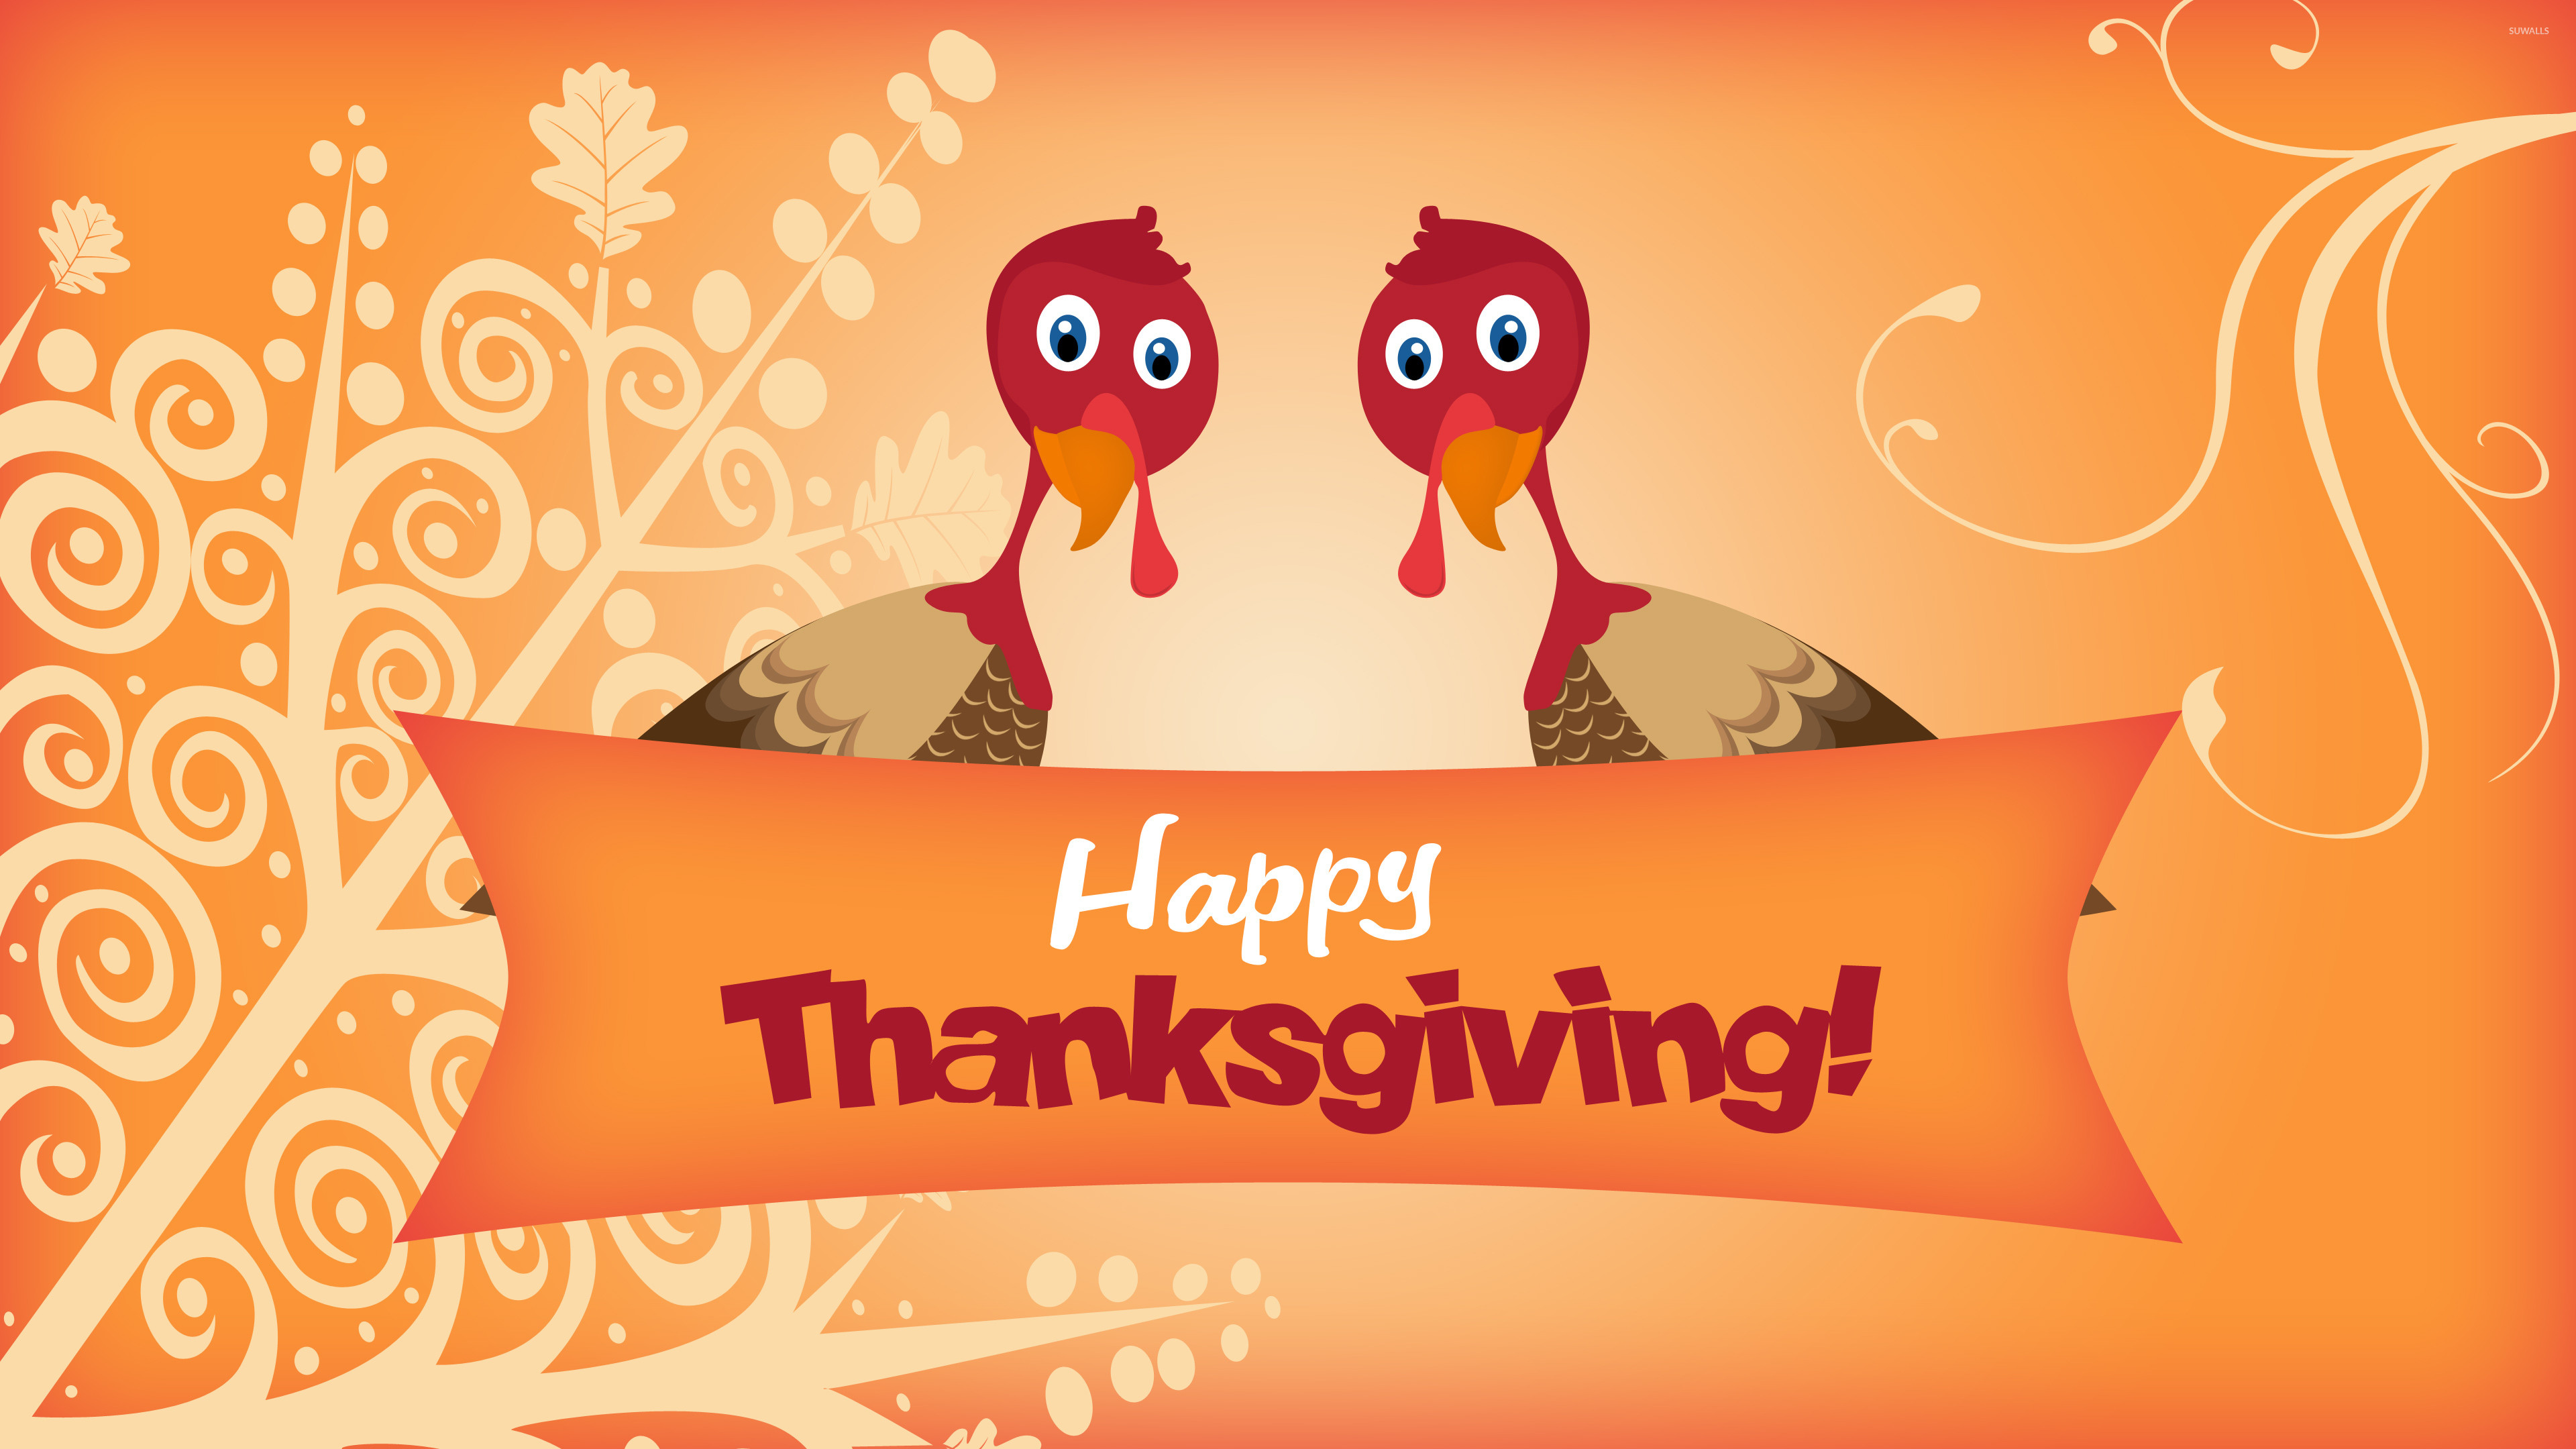 3840x2160 Two turkeys wishing you Happy Thanksgiving wallpaper